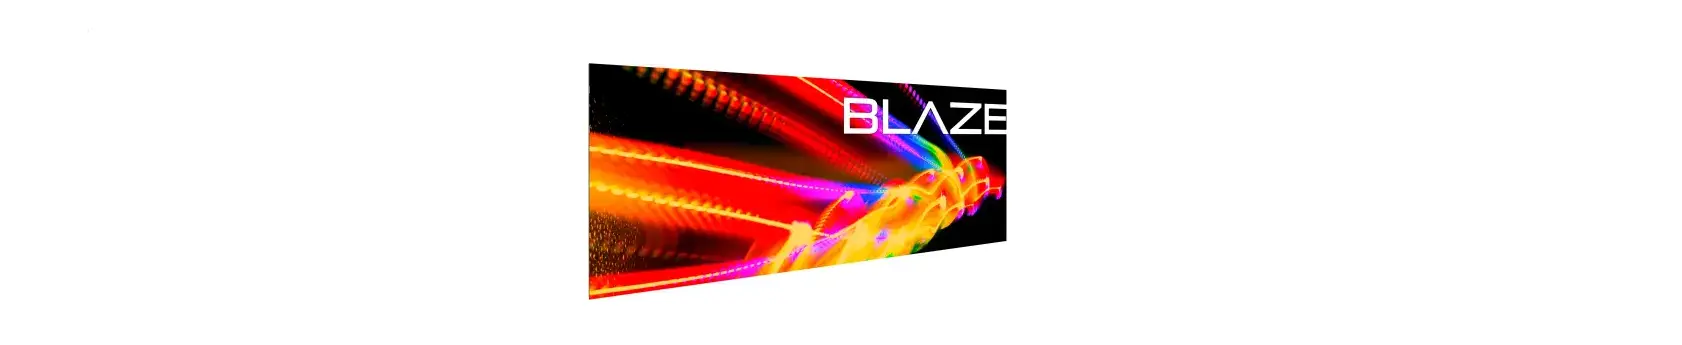 2008 Blaze Wall Light Box